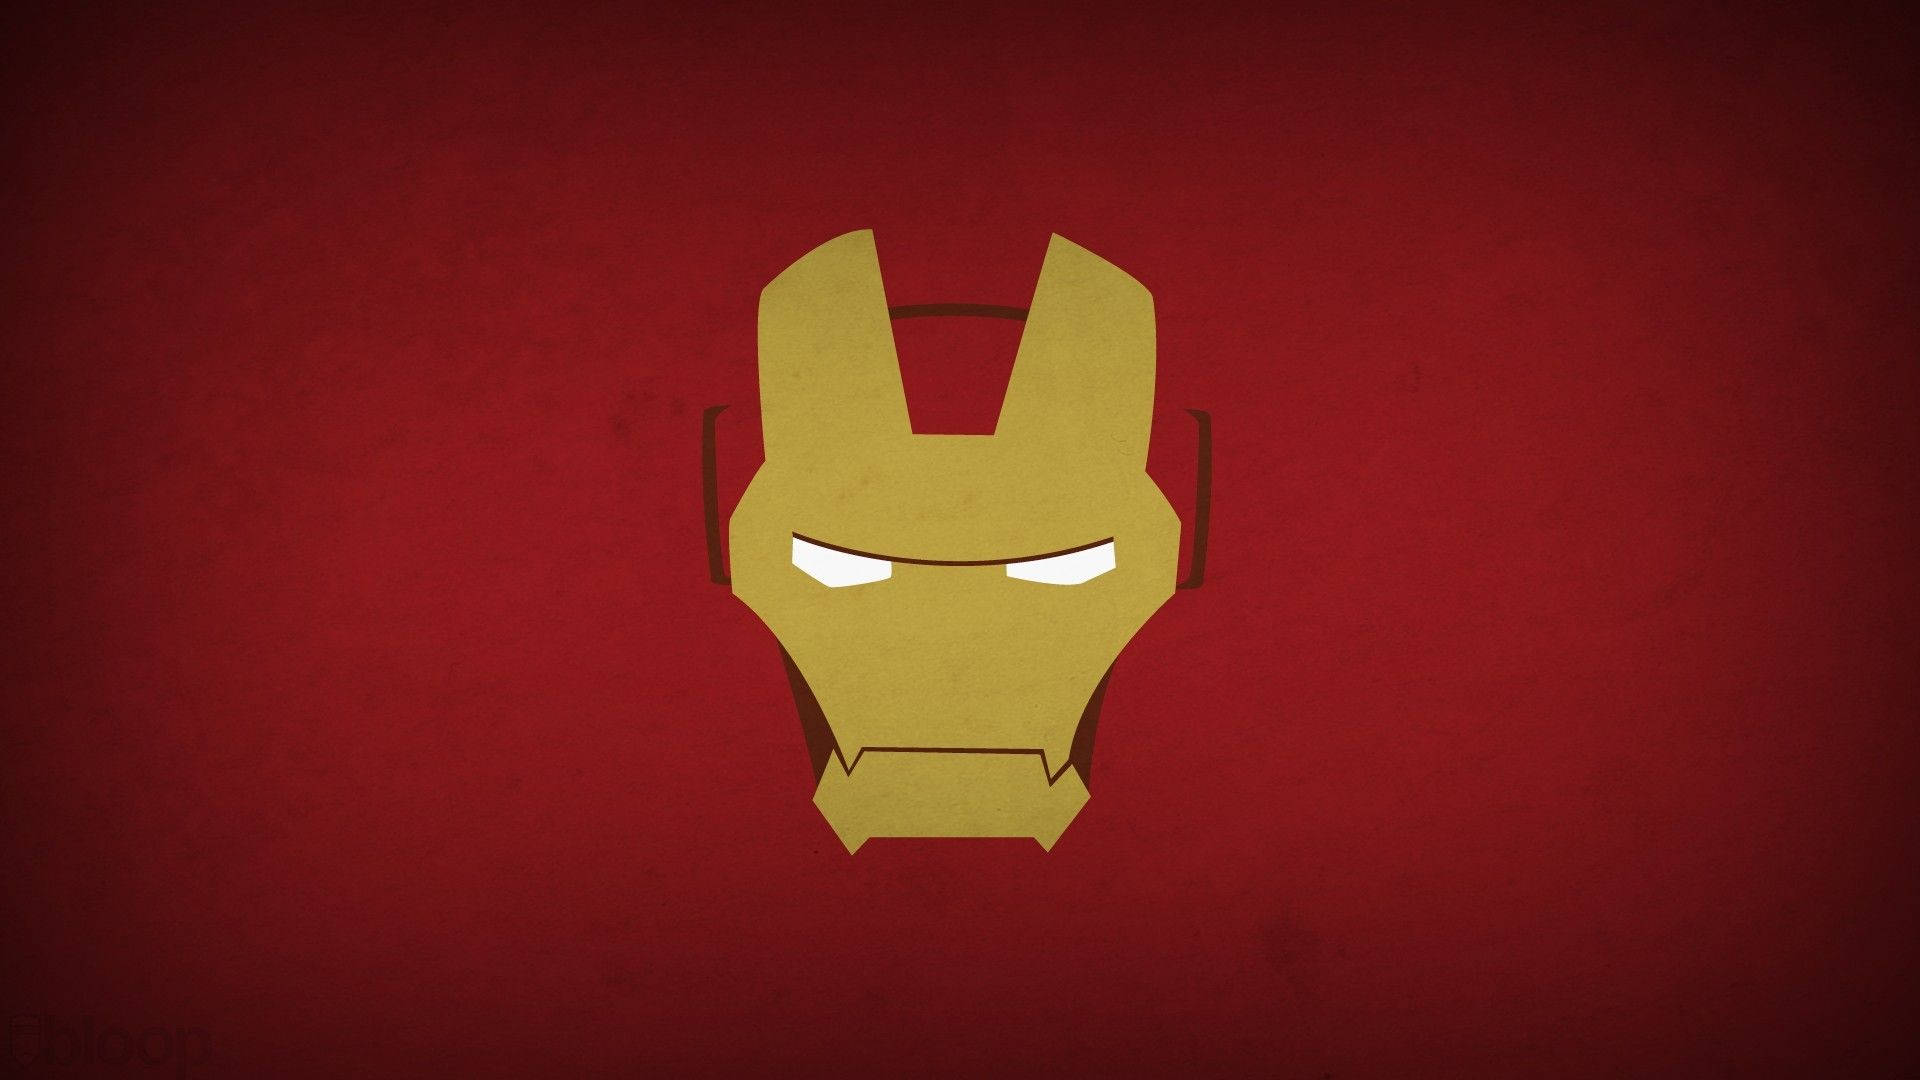 Simple Iron Man Full Hd